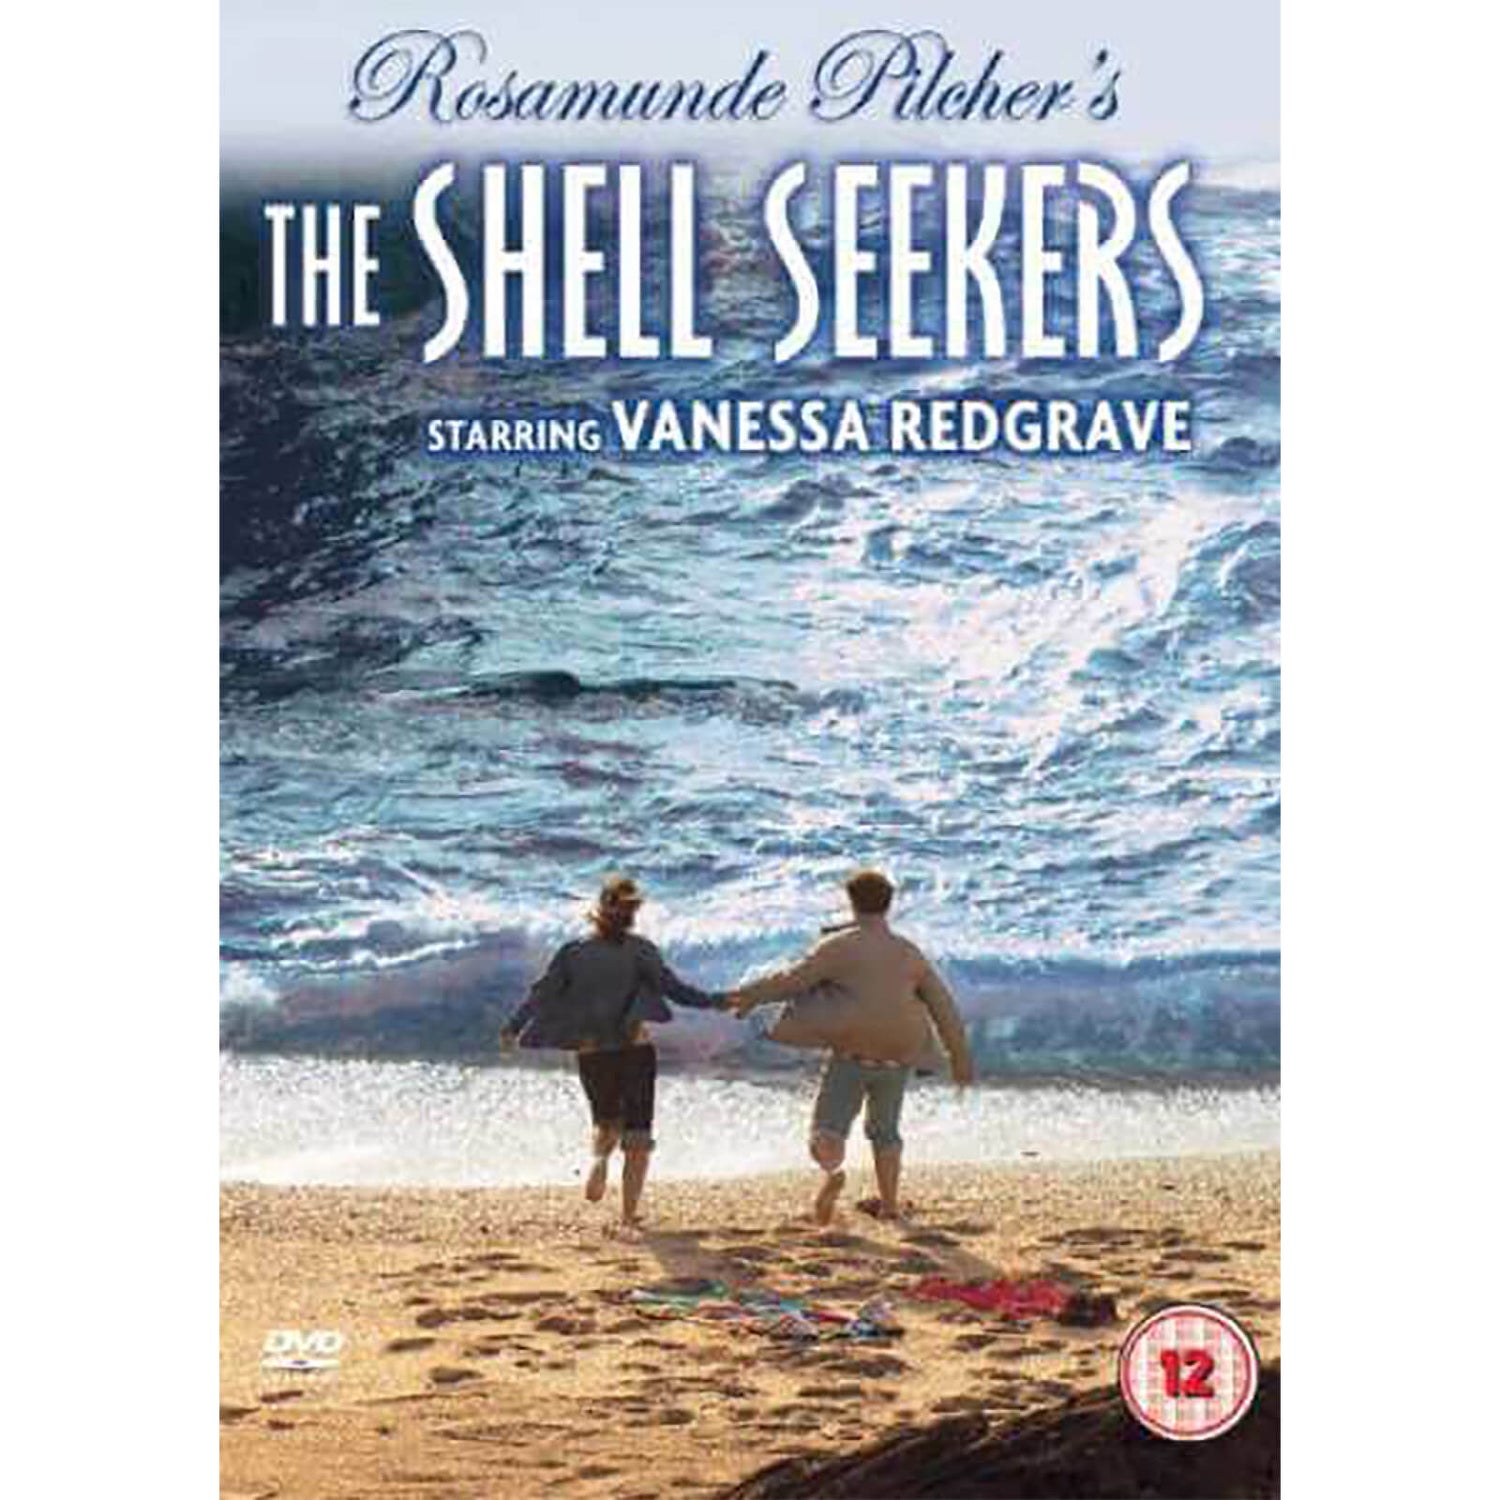 The Shellseekers